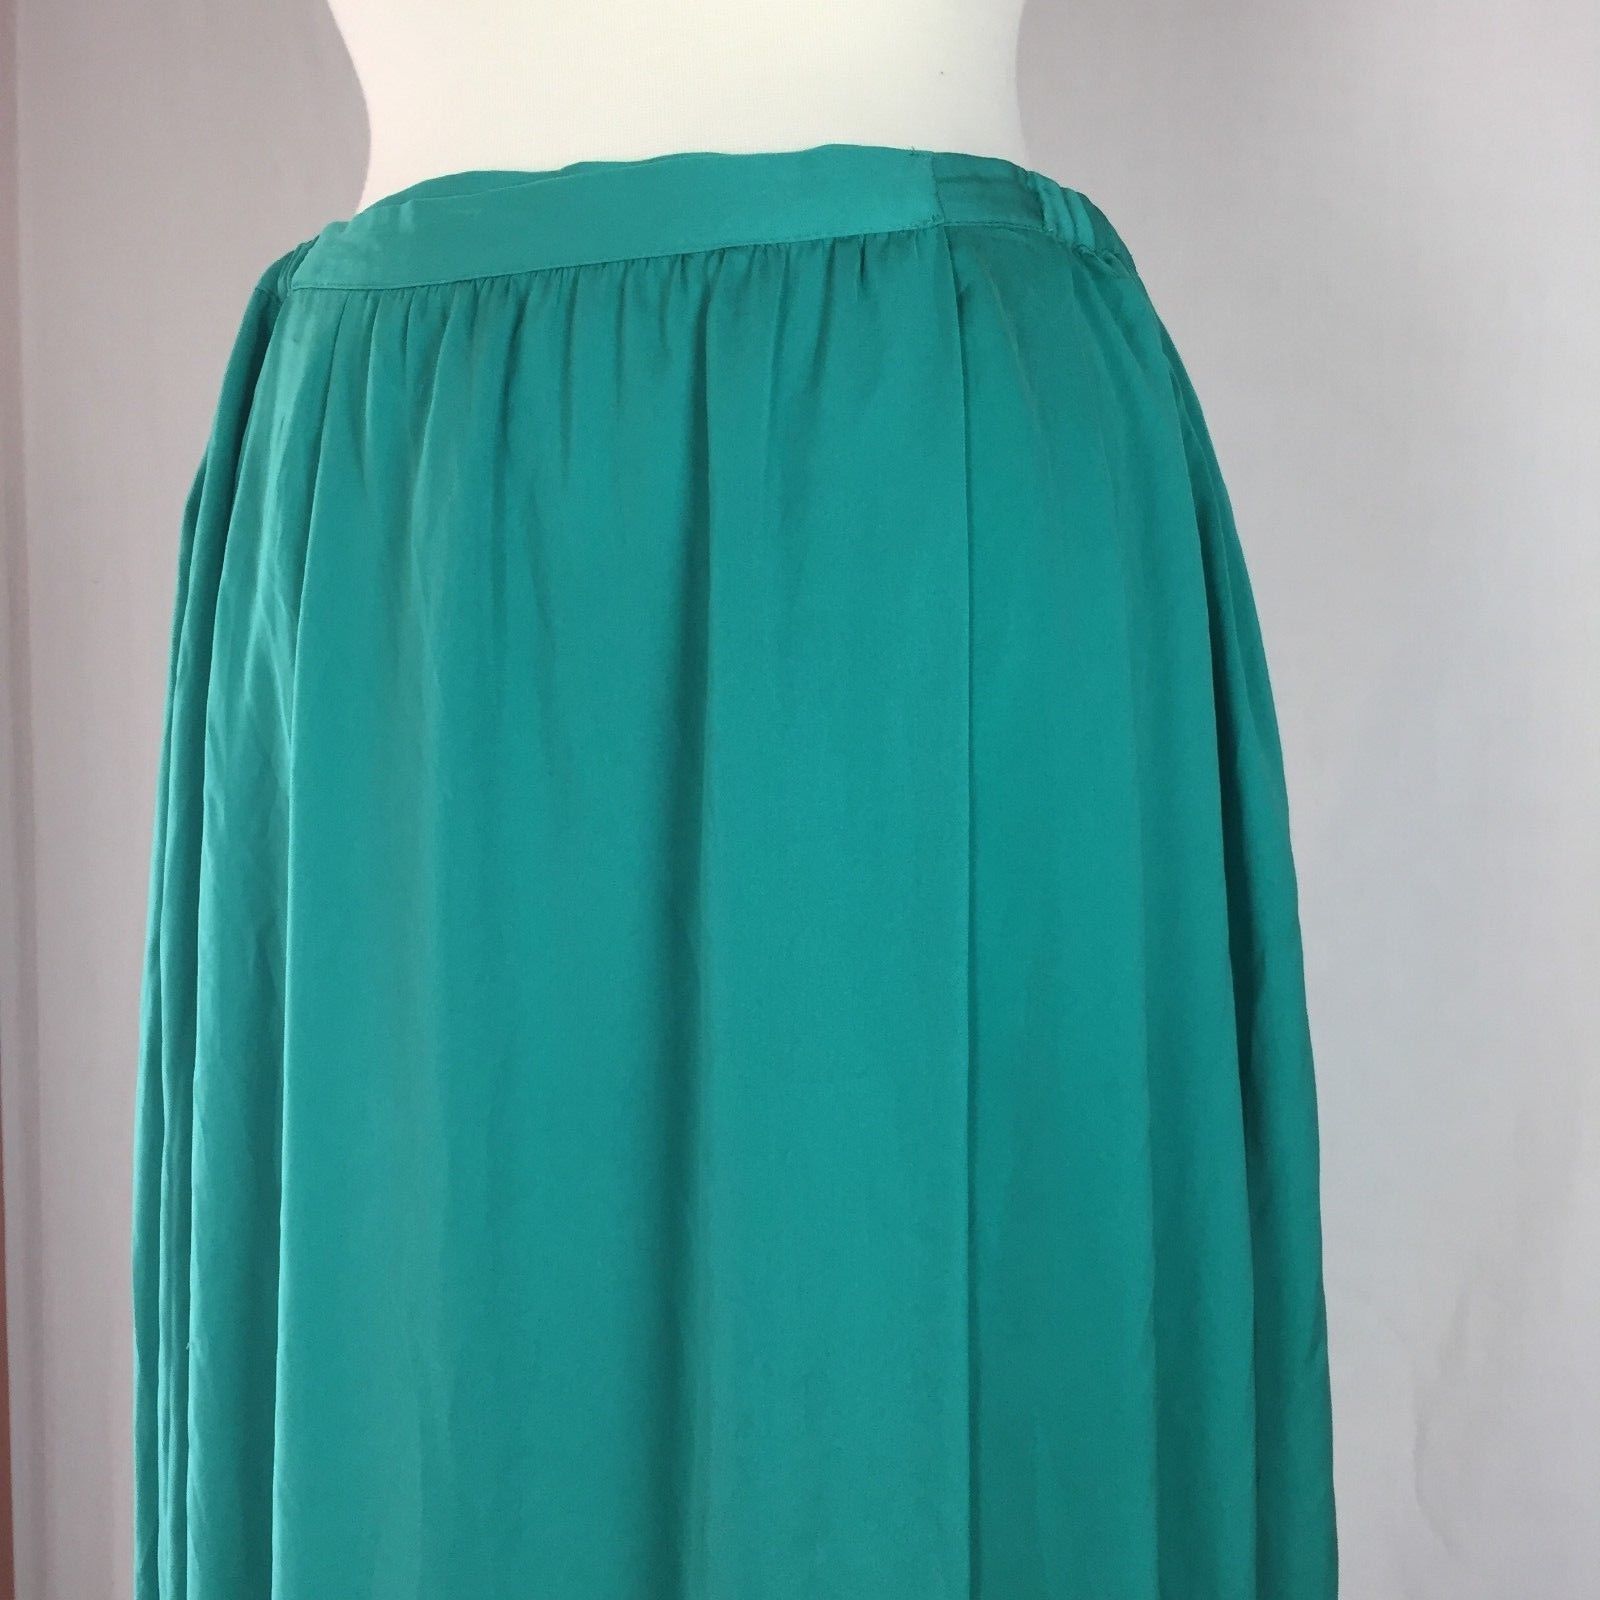 Zara Basic Women Size M Skirt Full Length Green Light Weight Casual ...